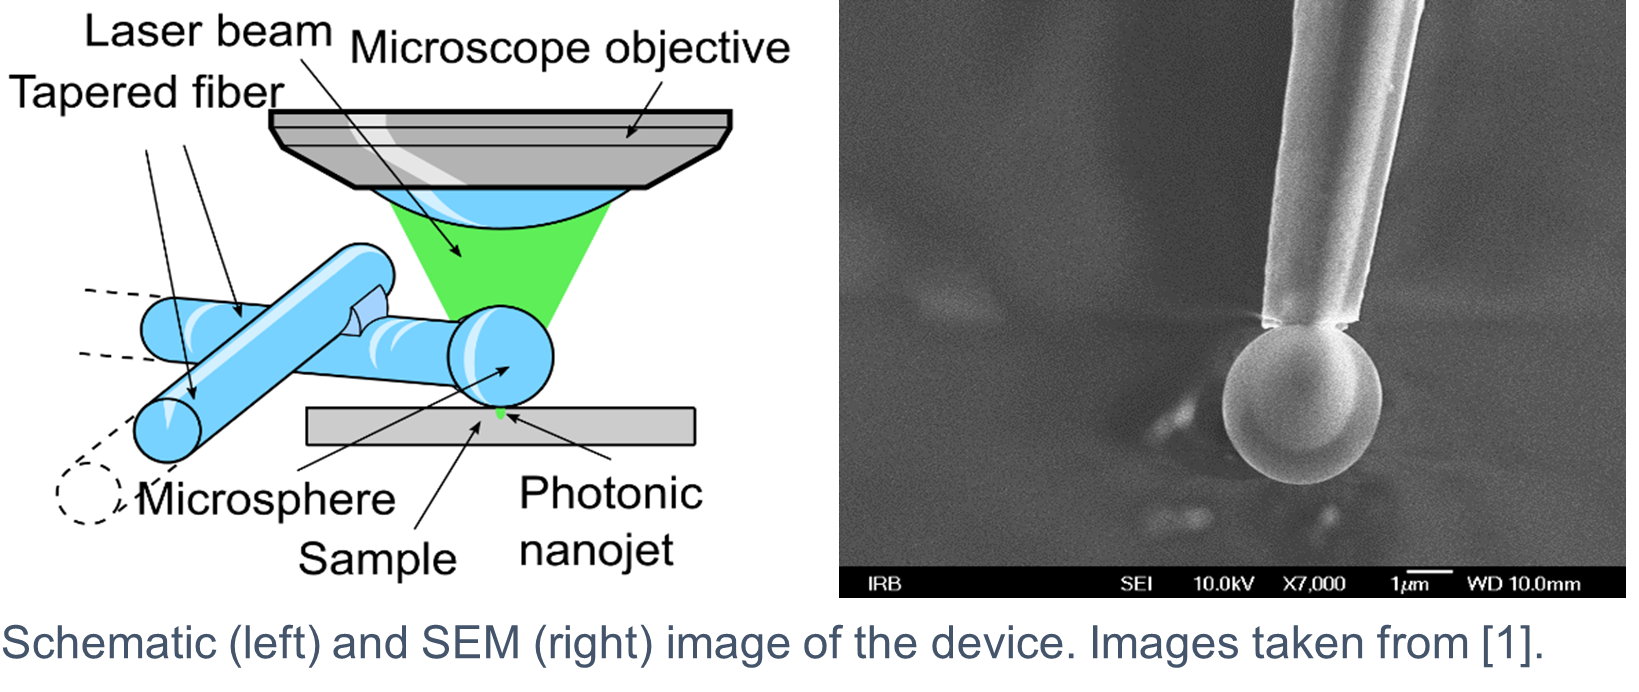 New optical device for enhanced spectroscopy and microscopy based on photonic nanojet